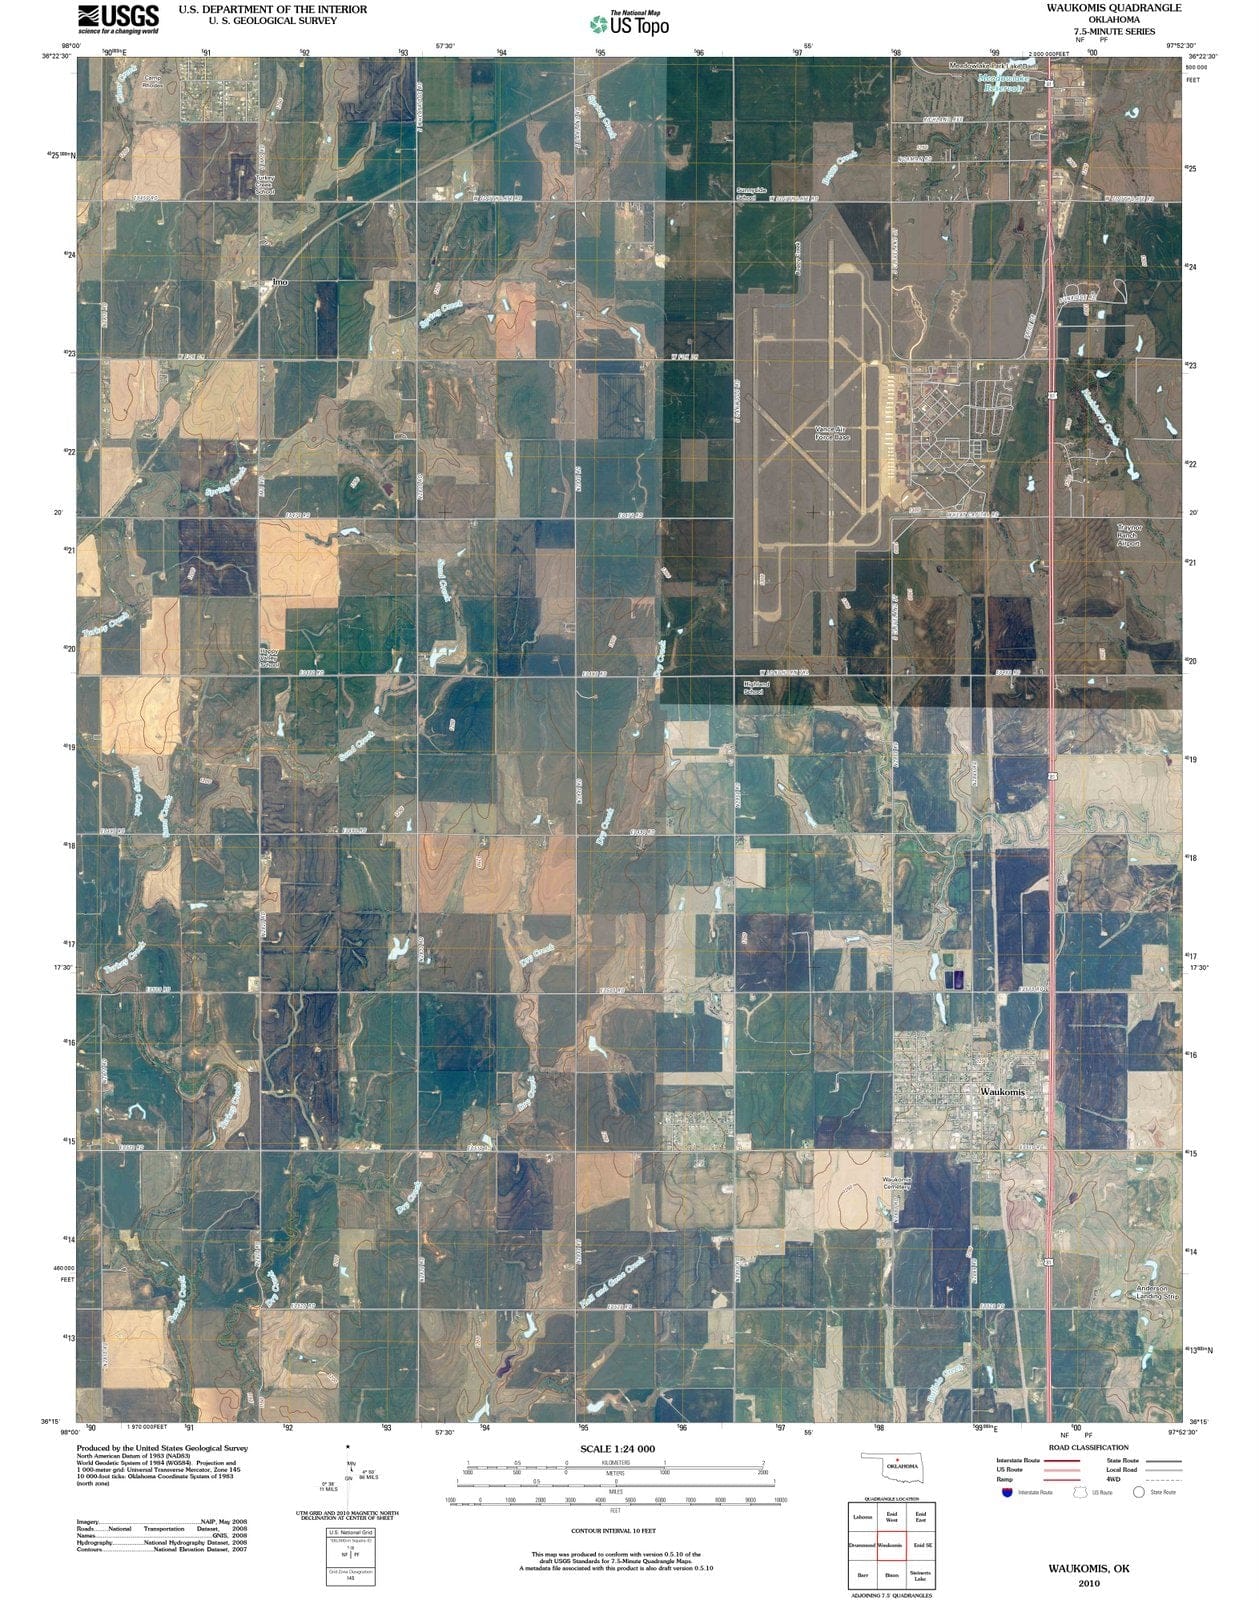 2010 Waukomis, OK - Oklahoma - USGS Topographic Map